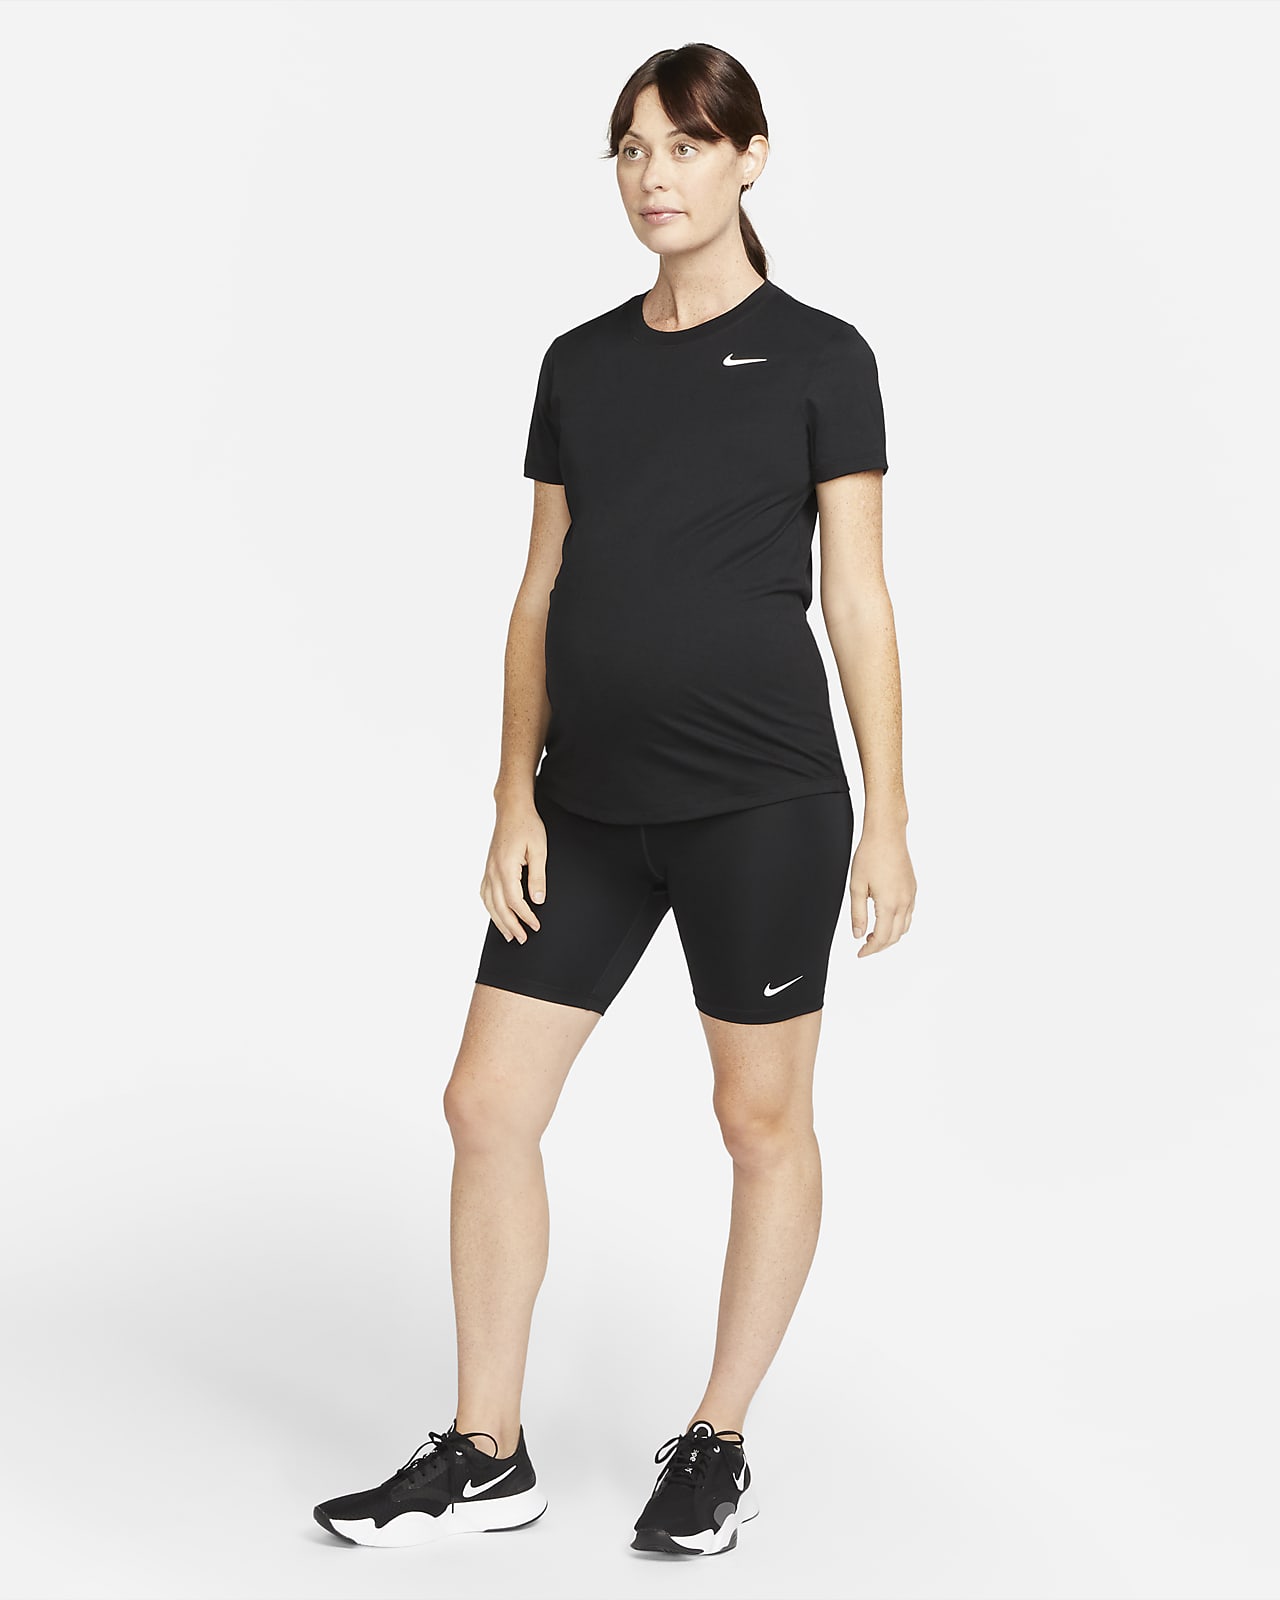 Nike Maternity Leggings  Maternity leggings, Performance leggings,  Maternity